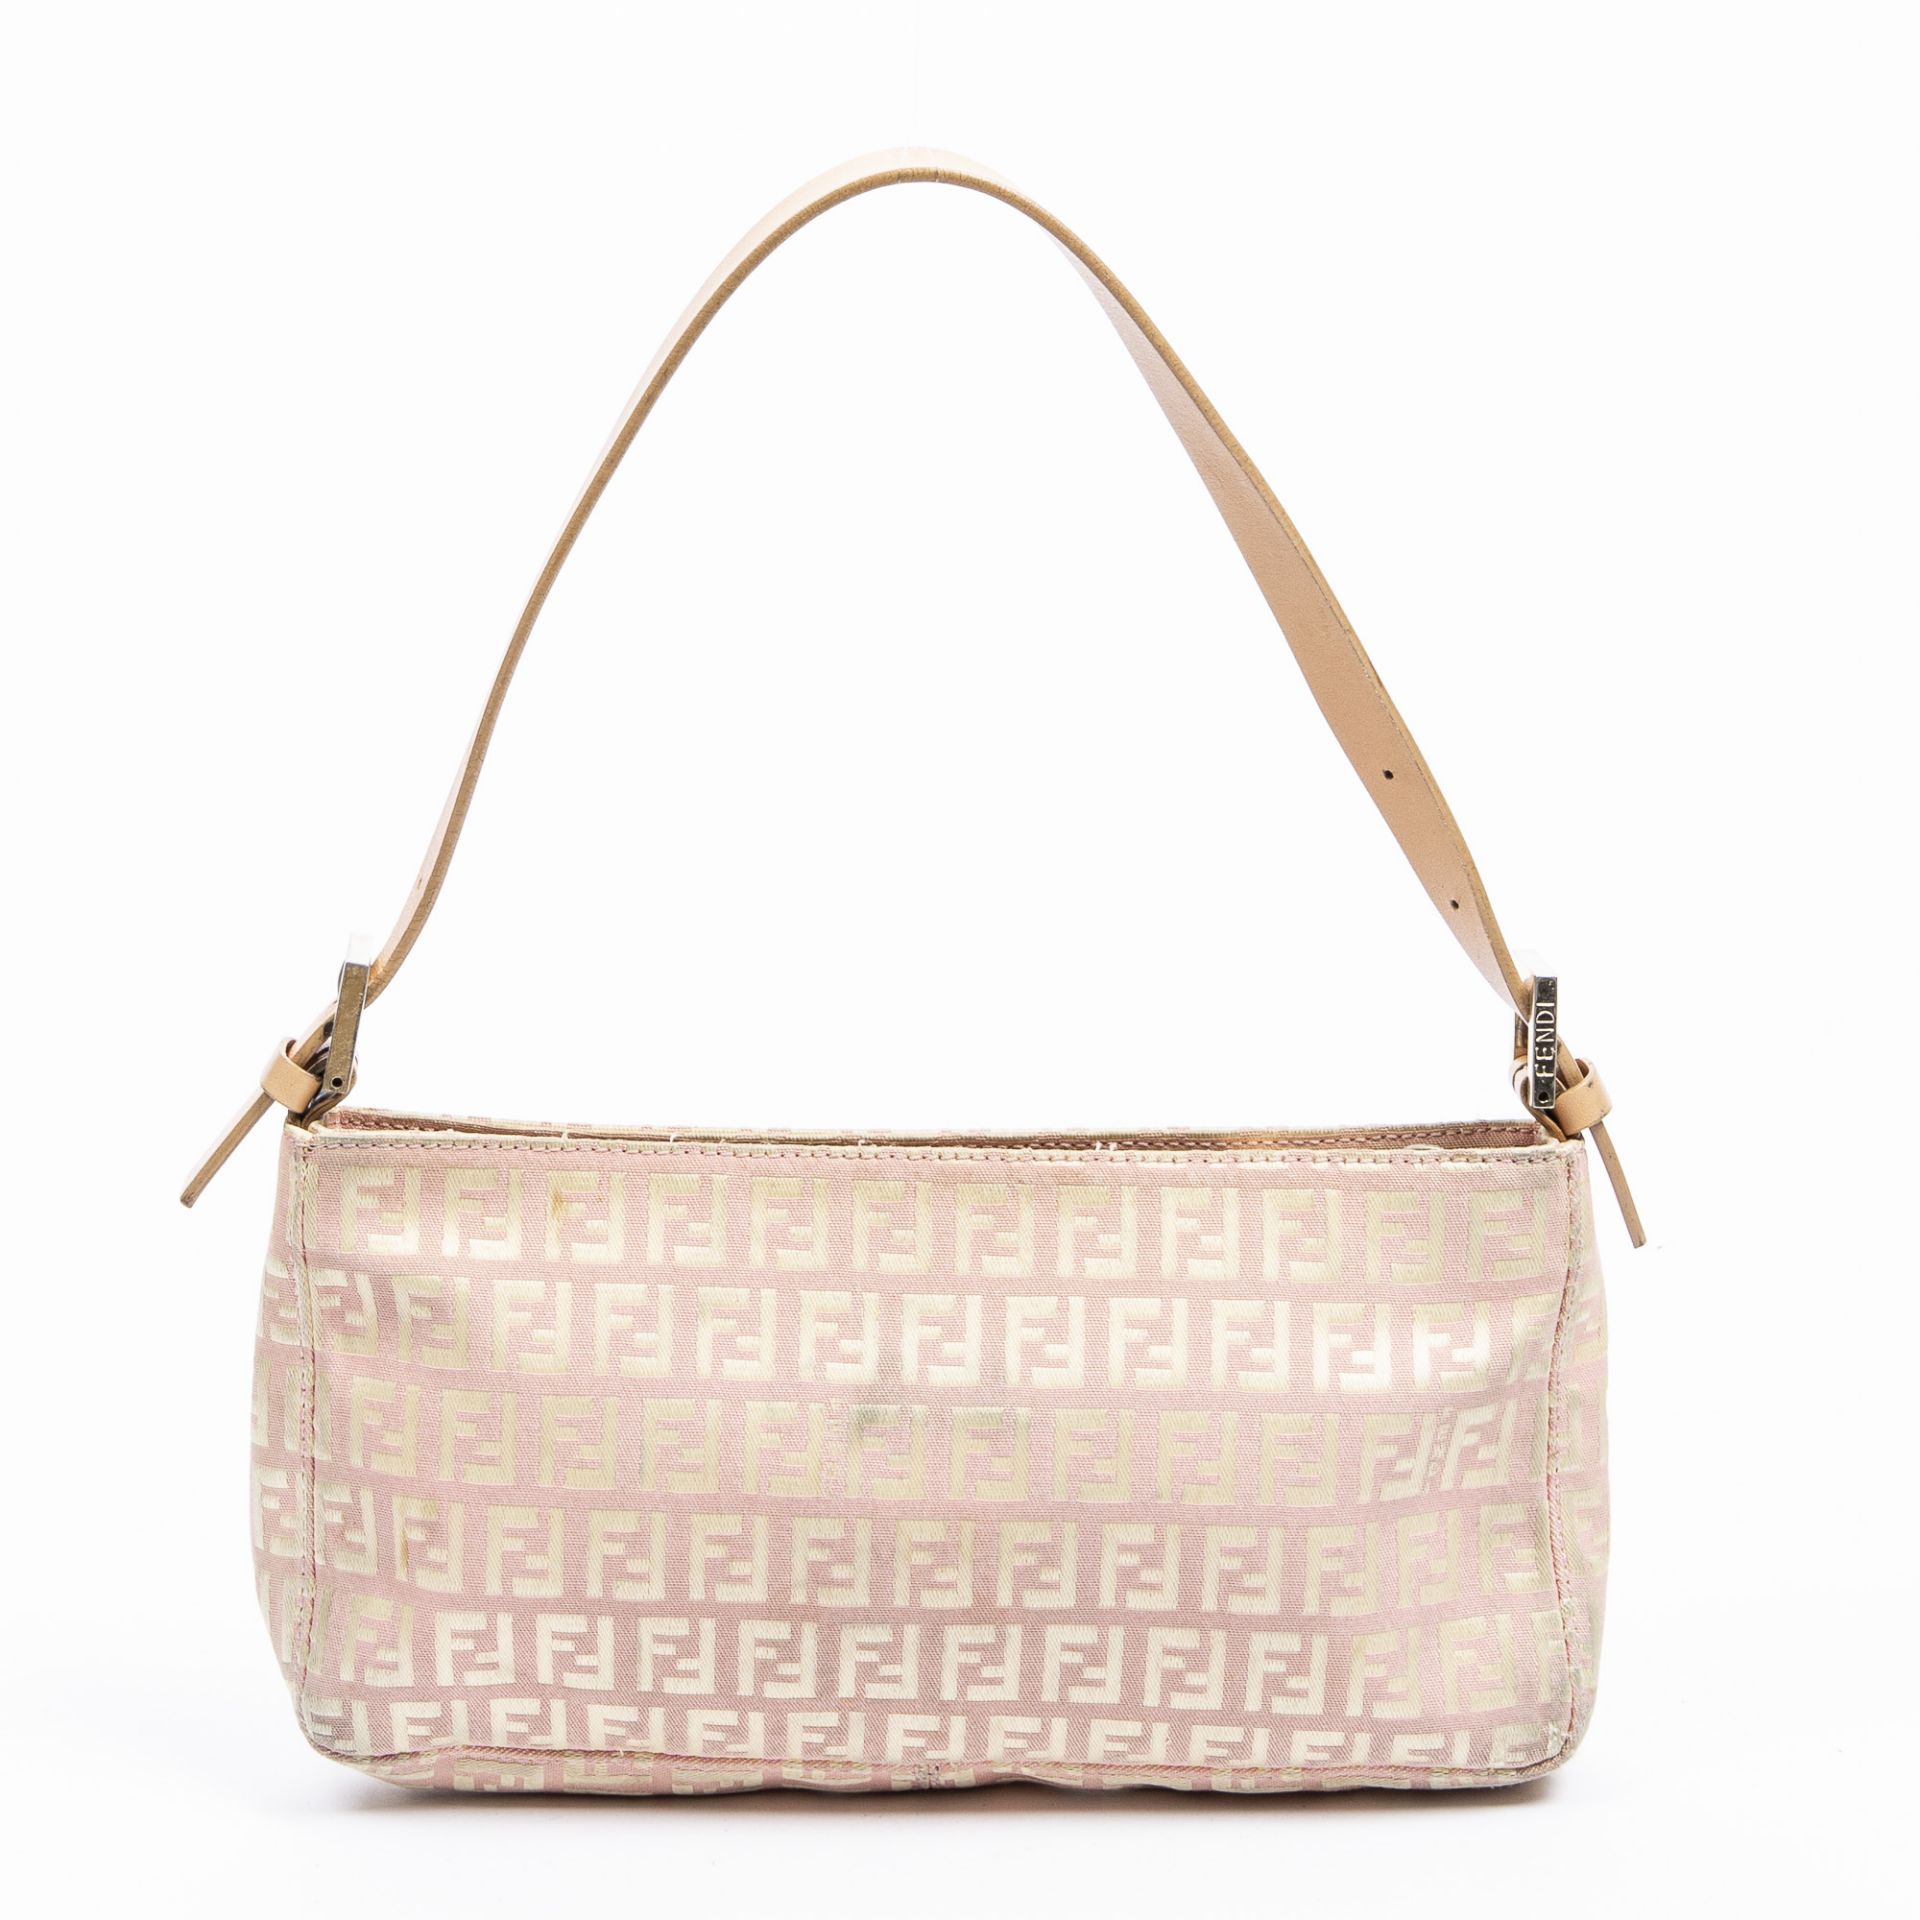 RRP £820.00 Lot To Contain 1 Fendi Canvas Pochette Bag Handbag In Light Pink/Beige - 25*13*3cm -